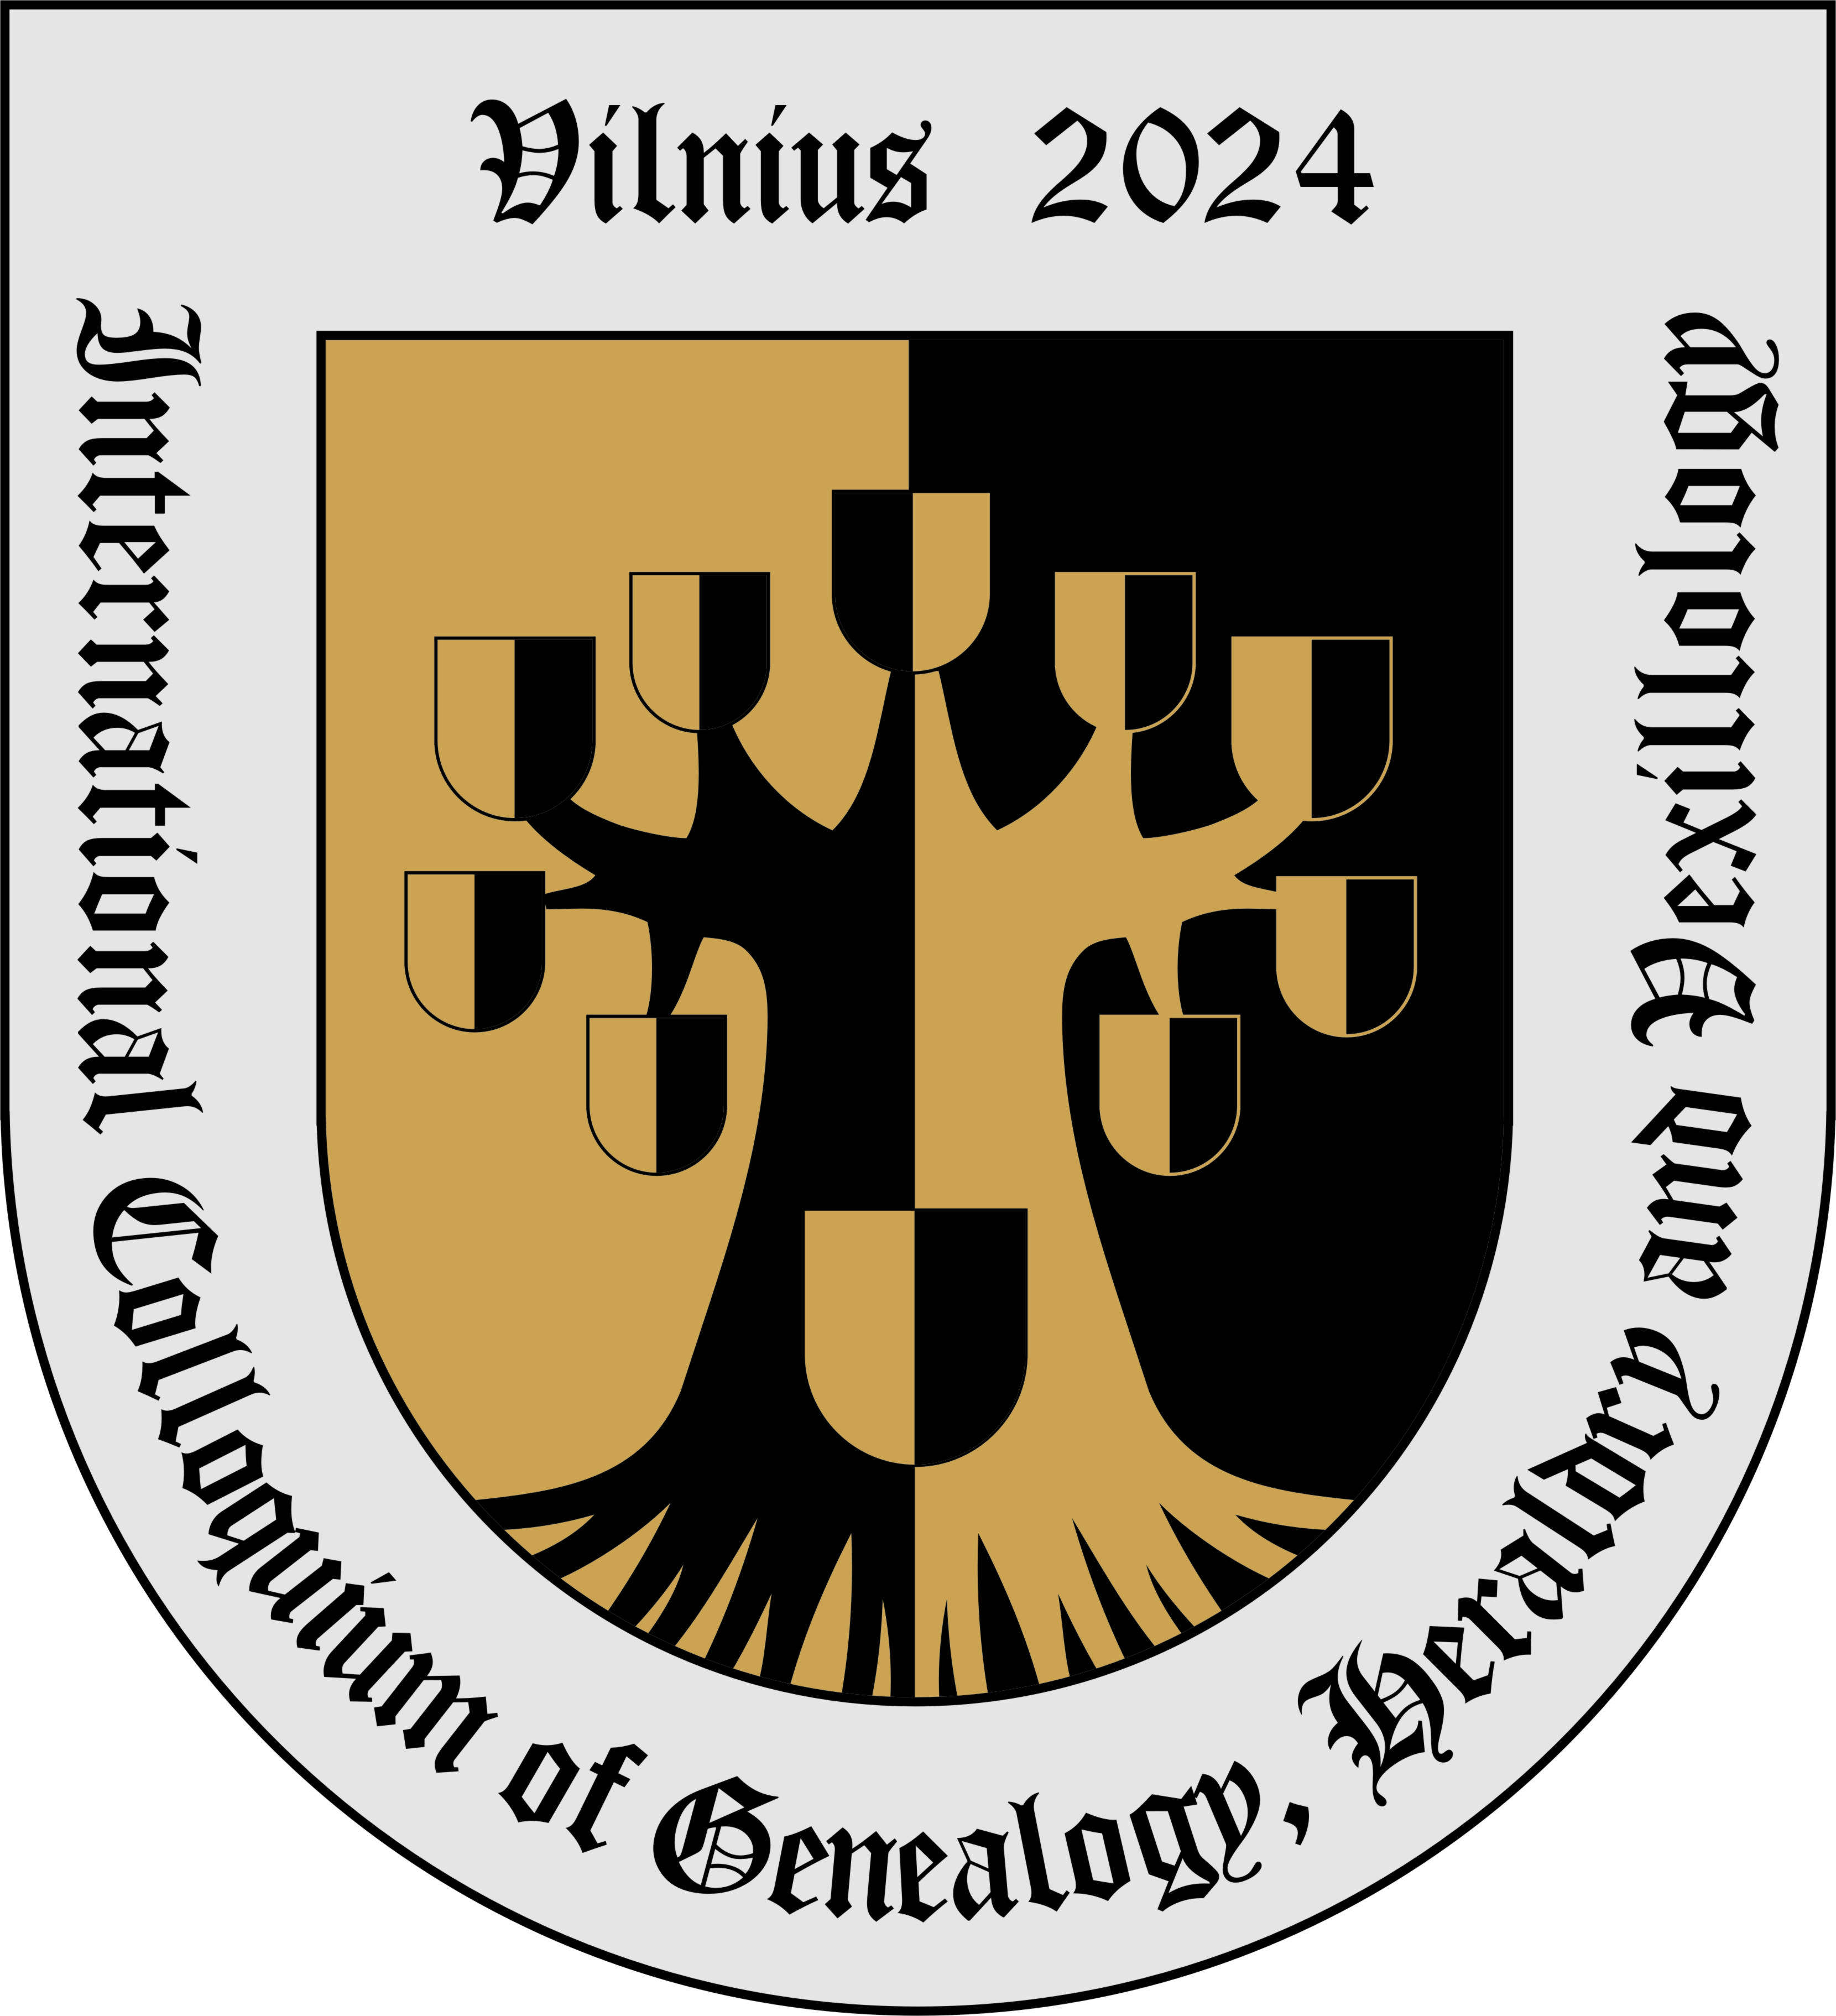 ICGHV Vilnius 2024